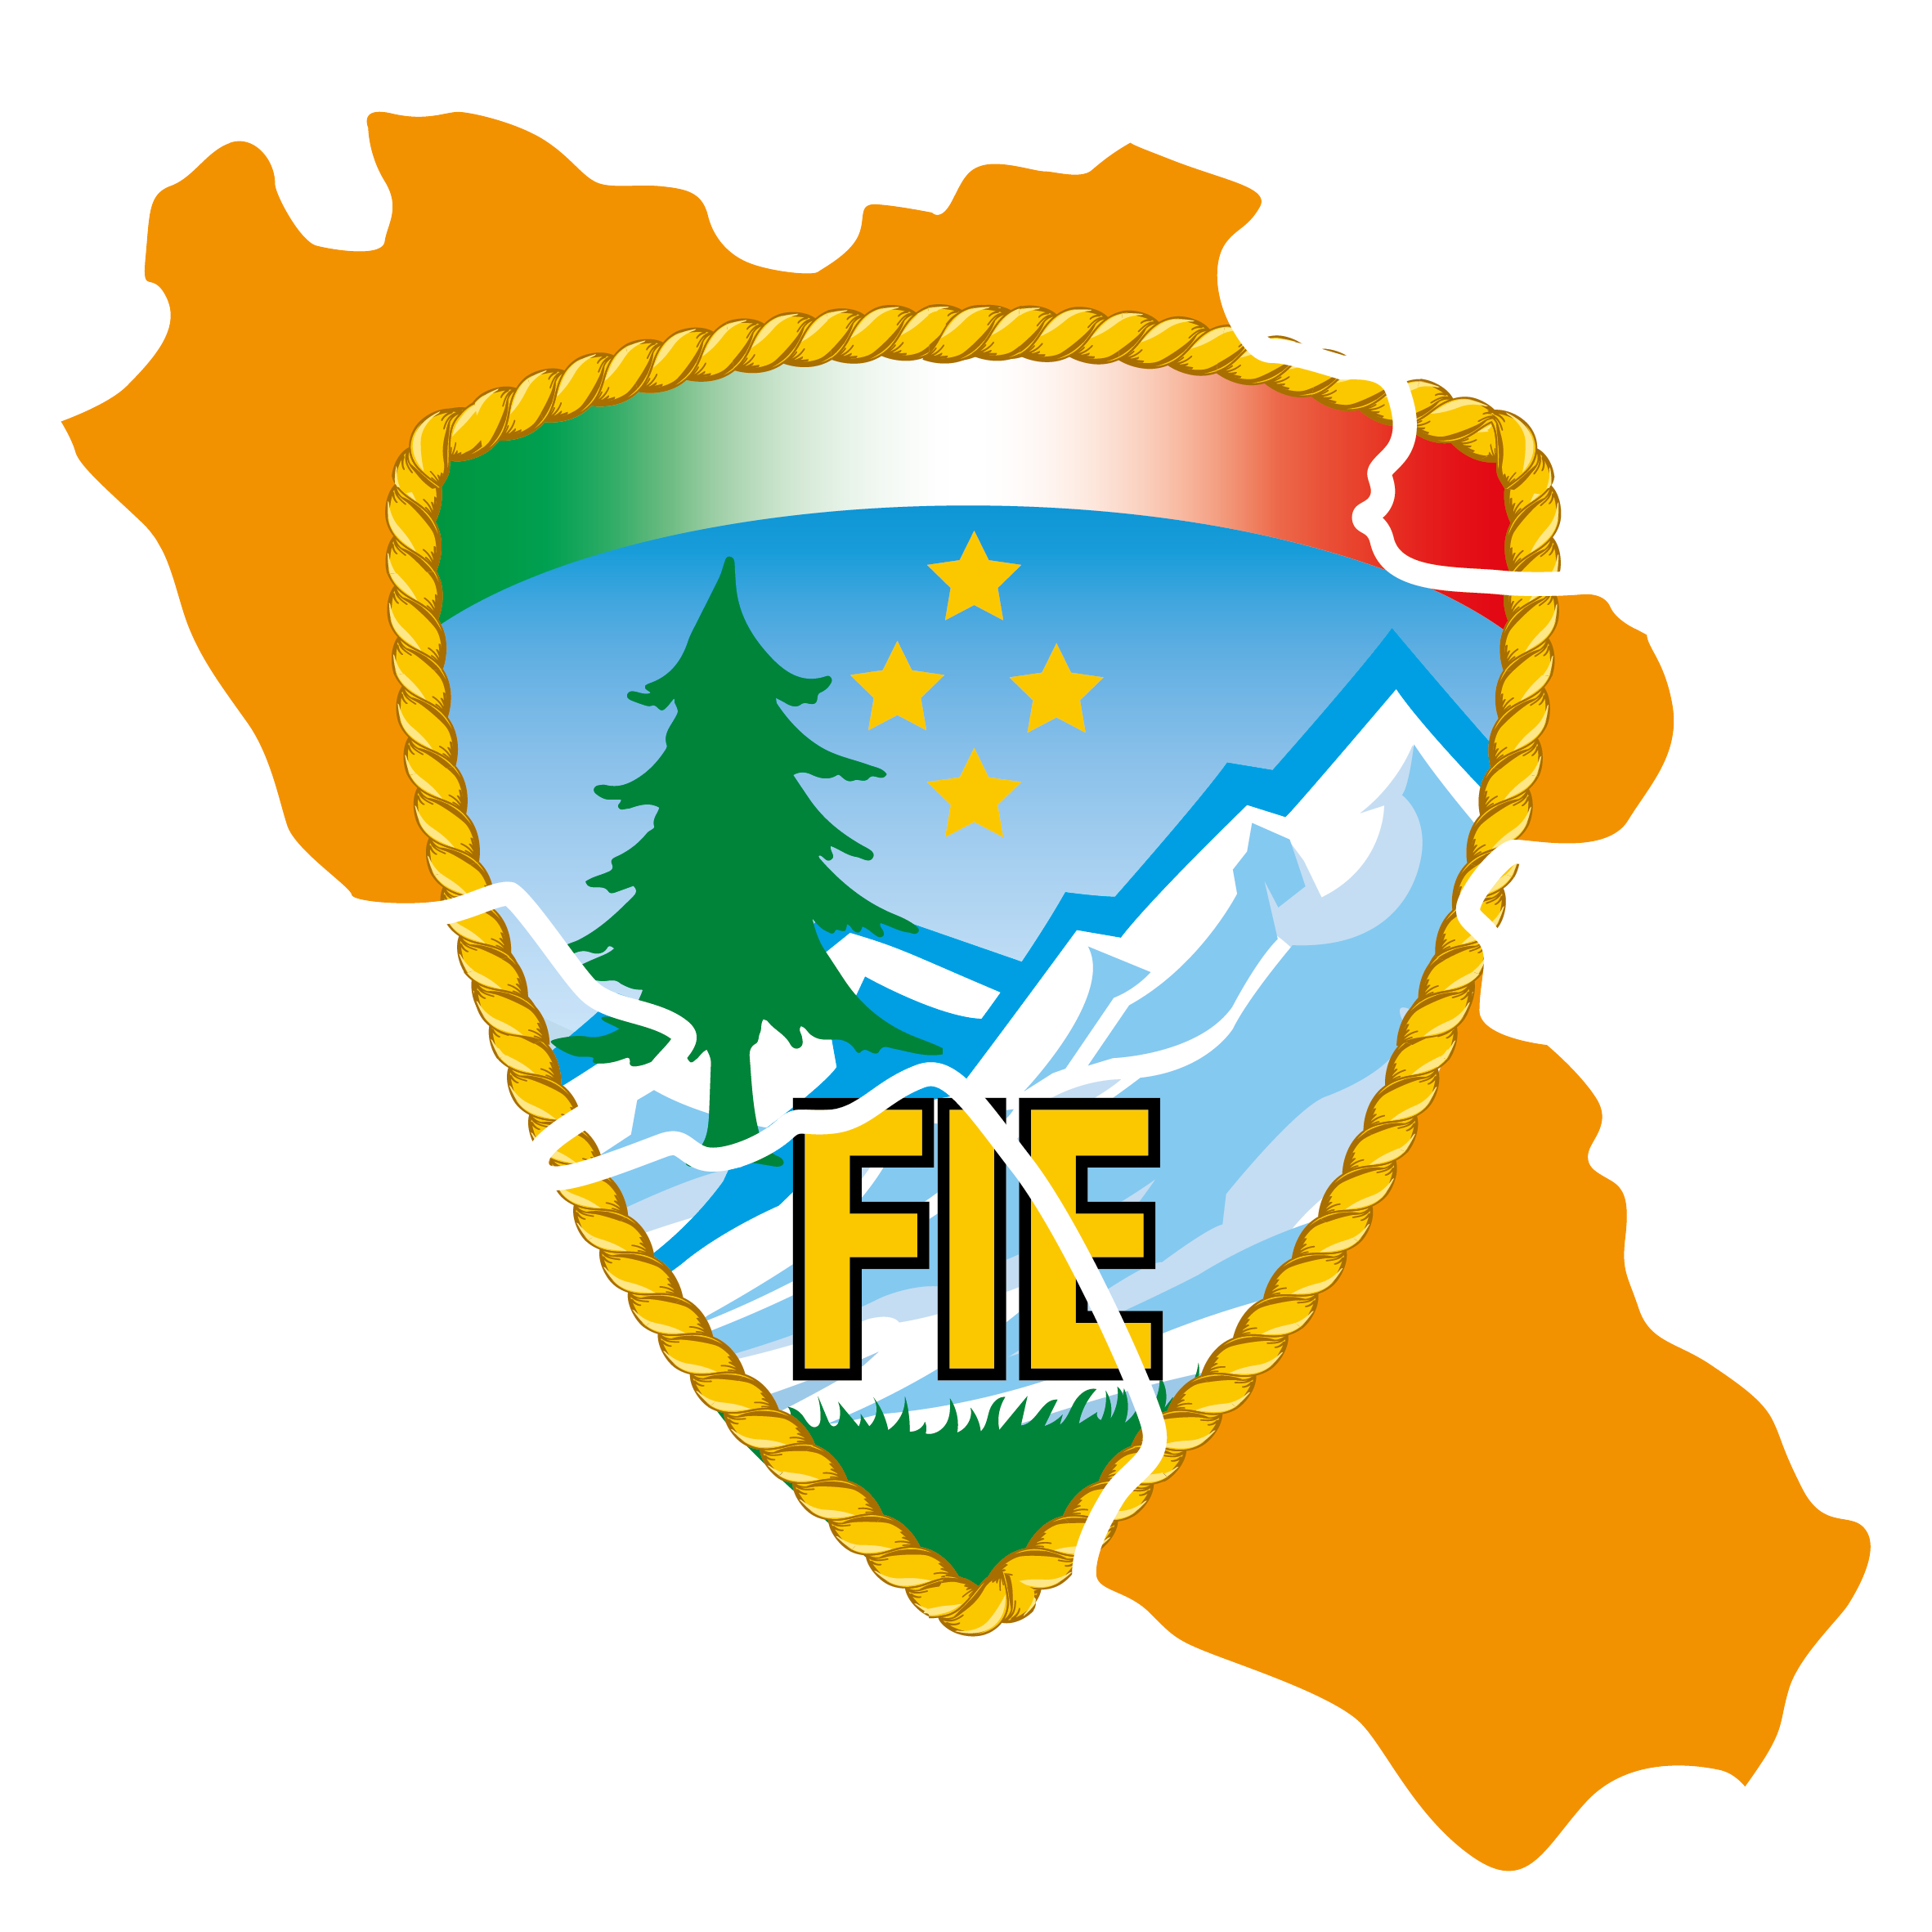 Comitato Regionale FIE Campania